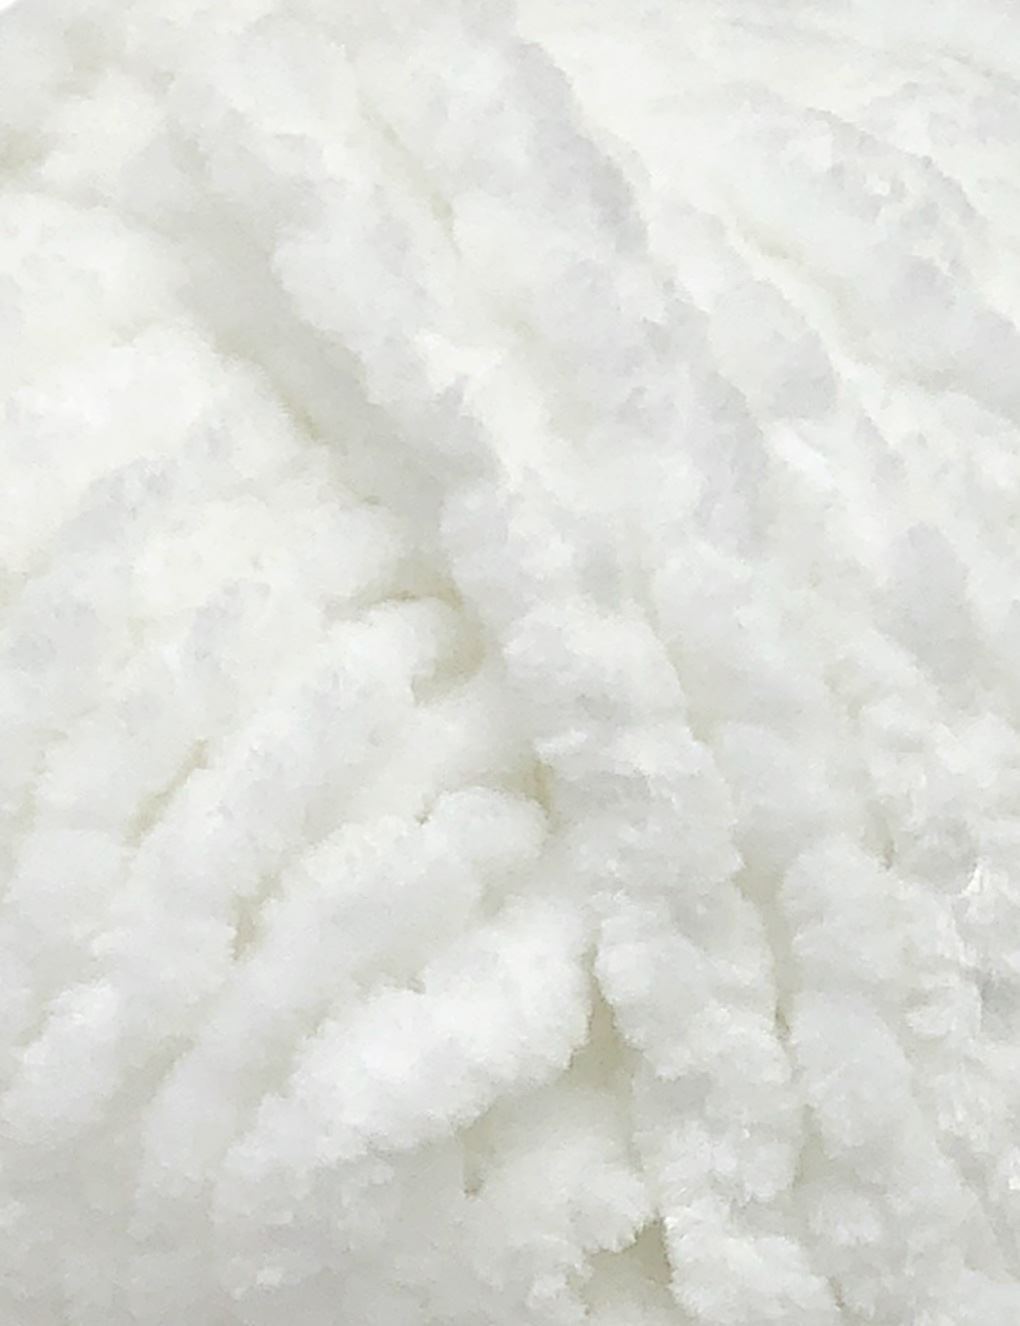 King Cole Yummy Crush White (4585) chenille yarn - 100g